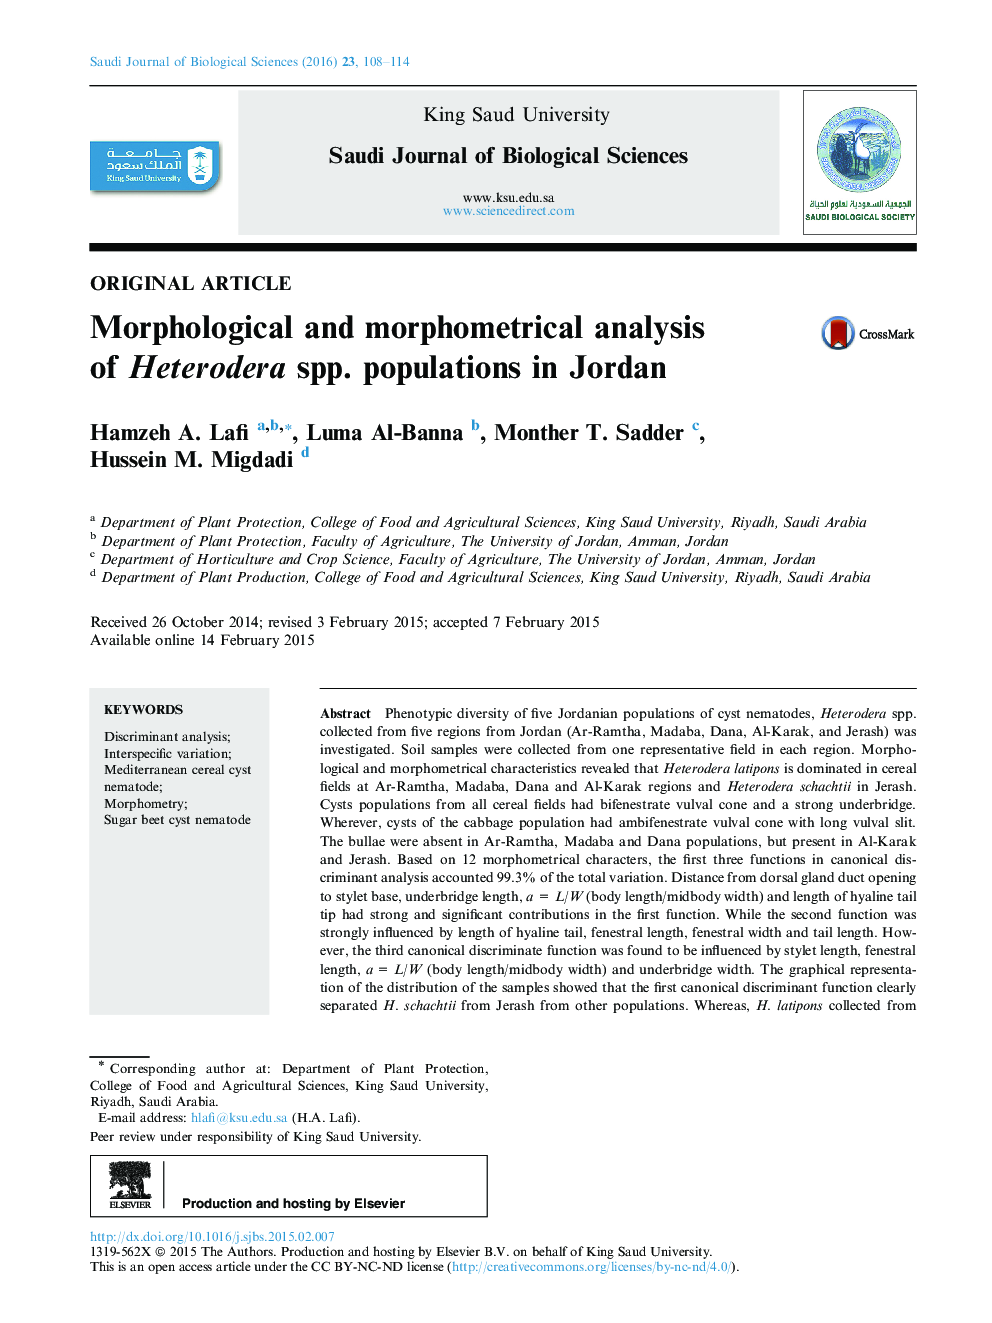 Morphological and morphometrical analysis of Heterodera spp. populations in Jordan 